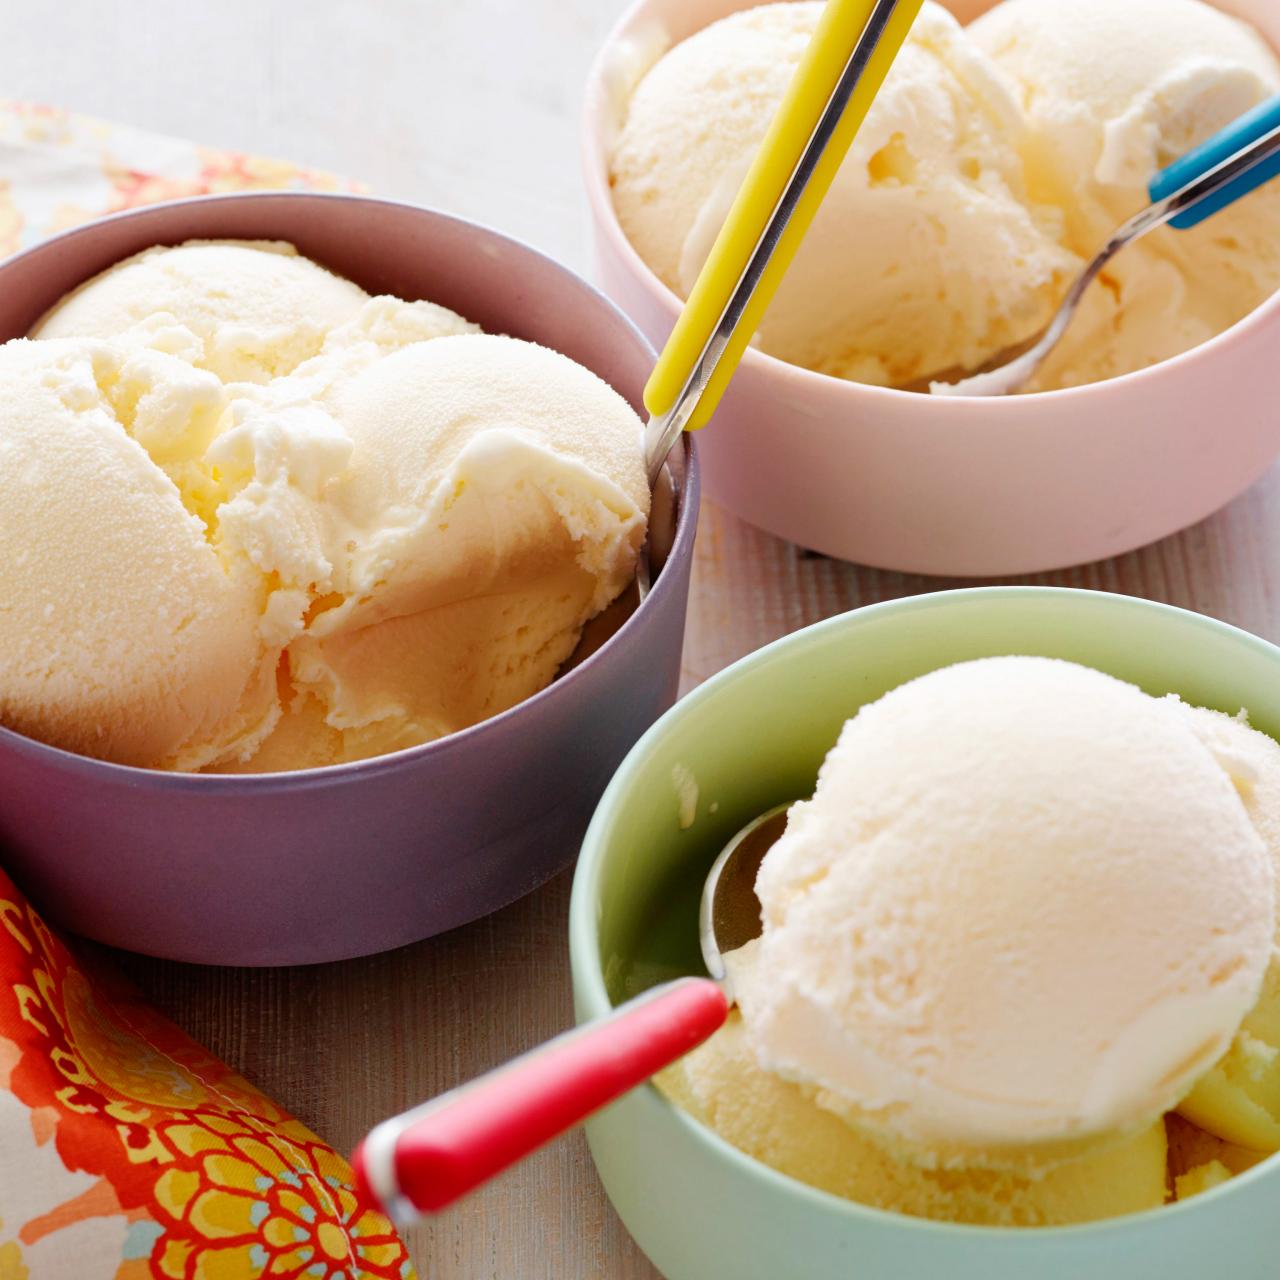 https://food.fnr.sndimg.com/content/dam/images/food/fullset/2014/6/27/1/FN_Homemade-Vanilla-Ice-Cream_s4x3.jpg.rend.hgtvcom.1280.1280.suffix/1403925376013.jpeg